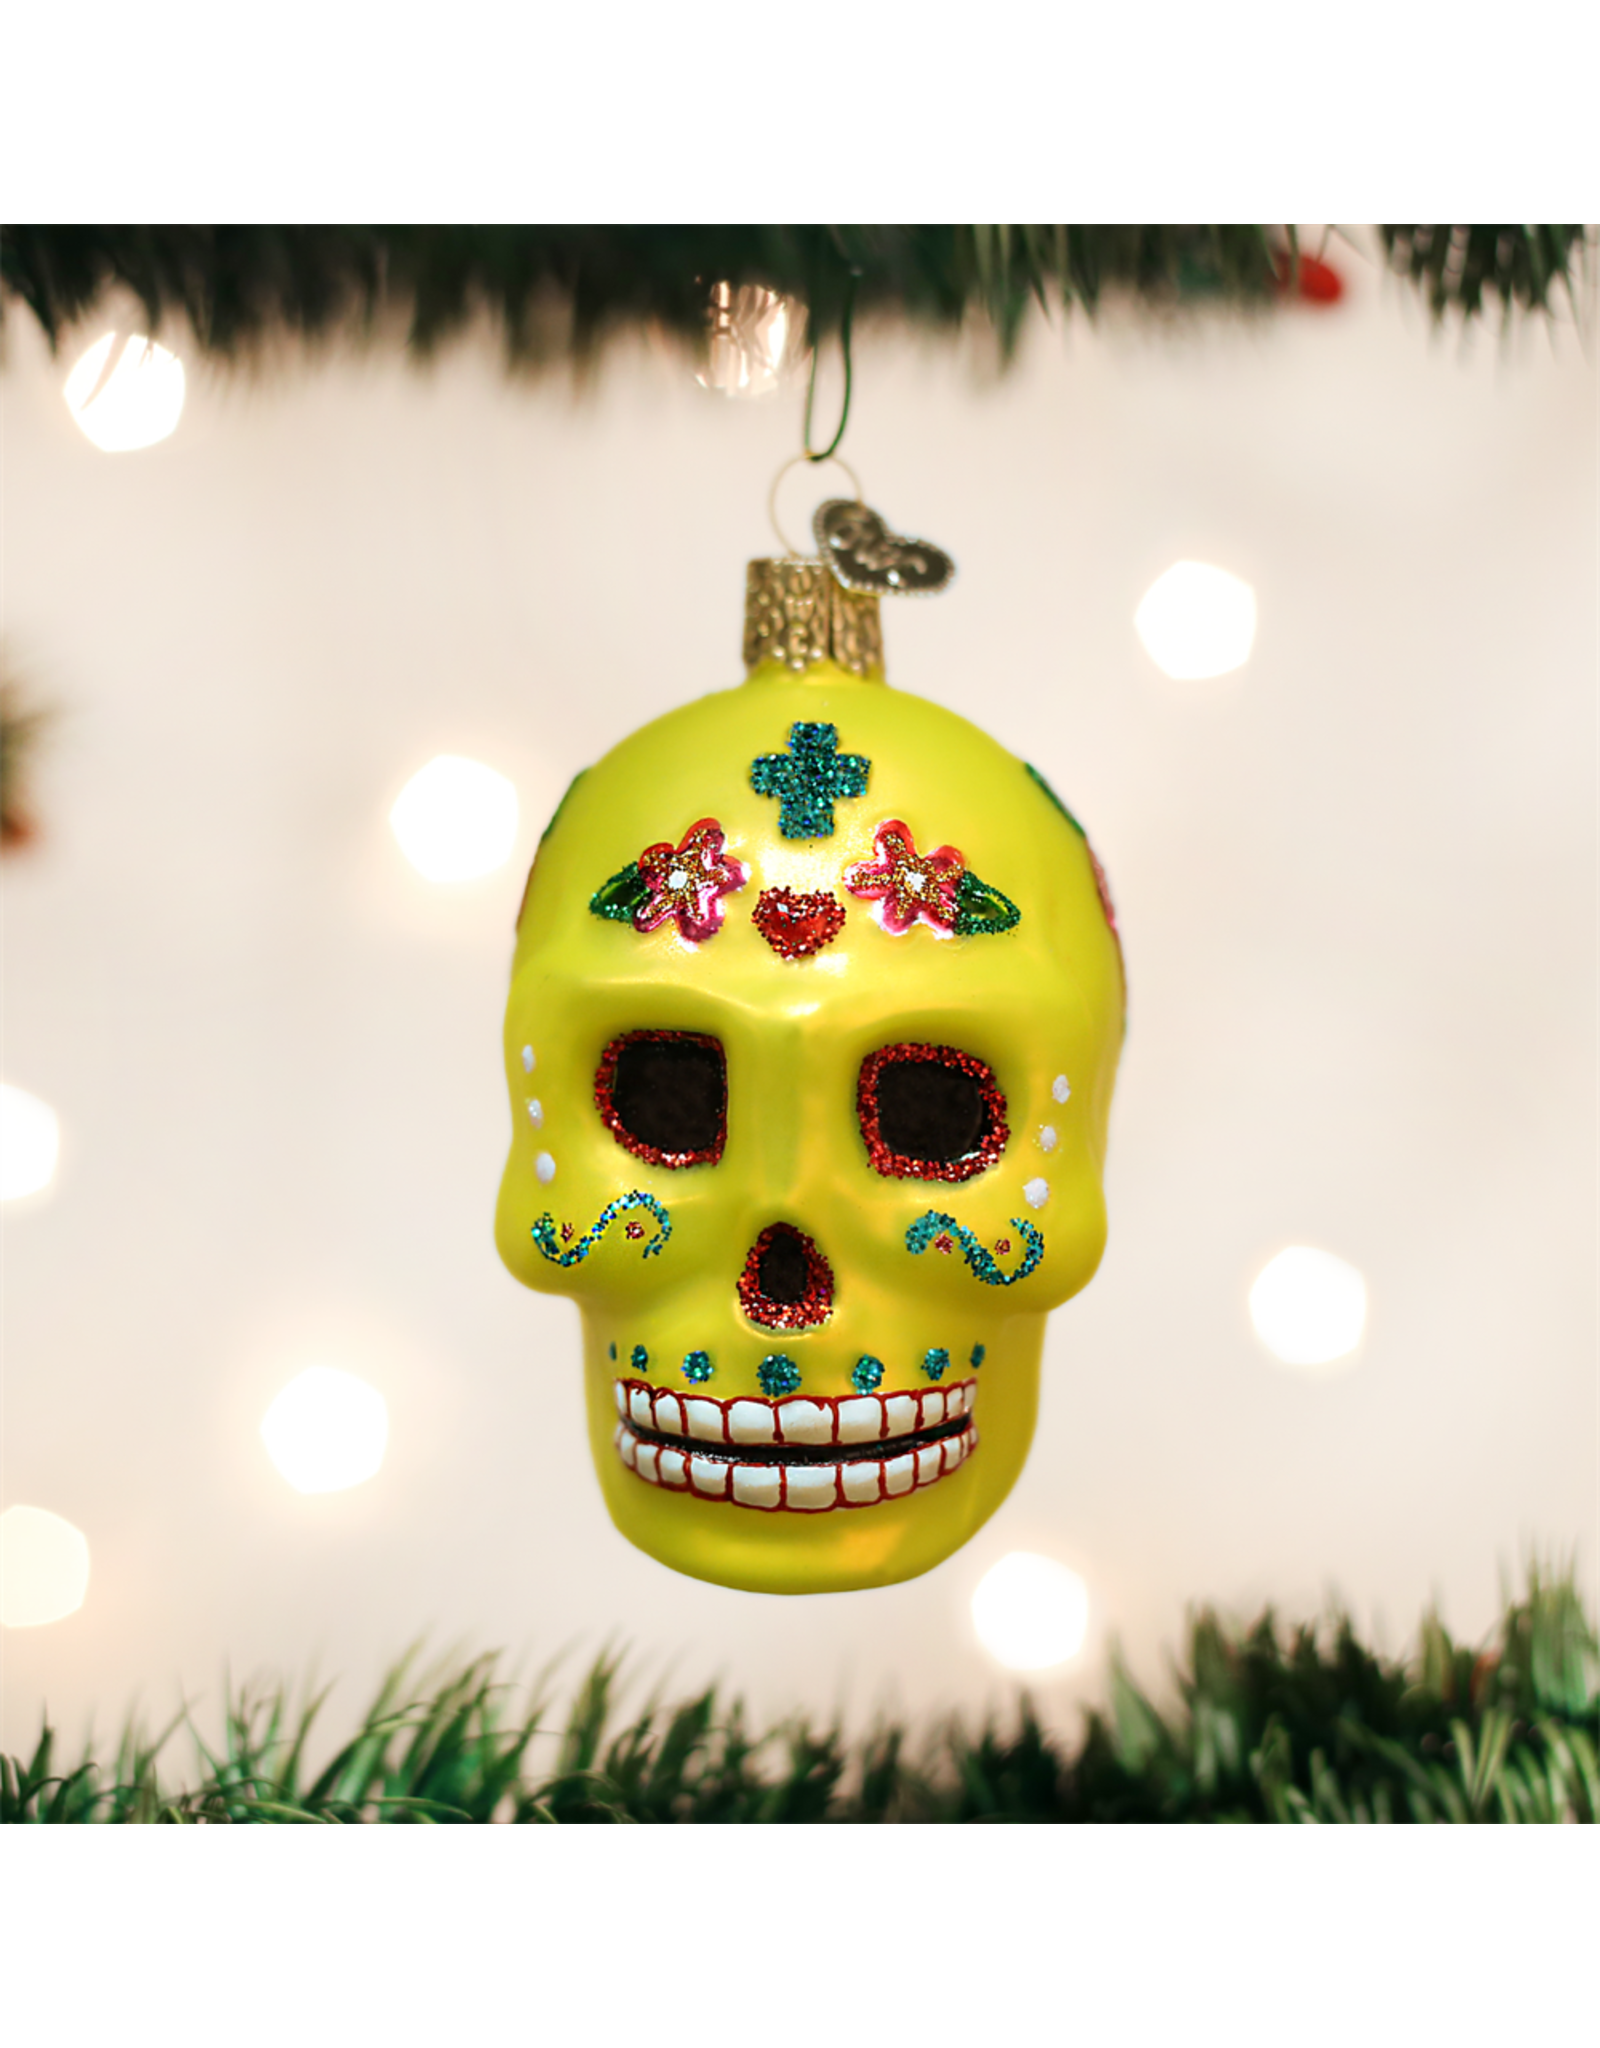 Old World Christmas Sugar Skull Ornament